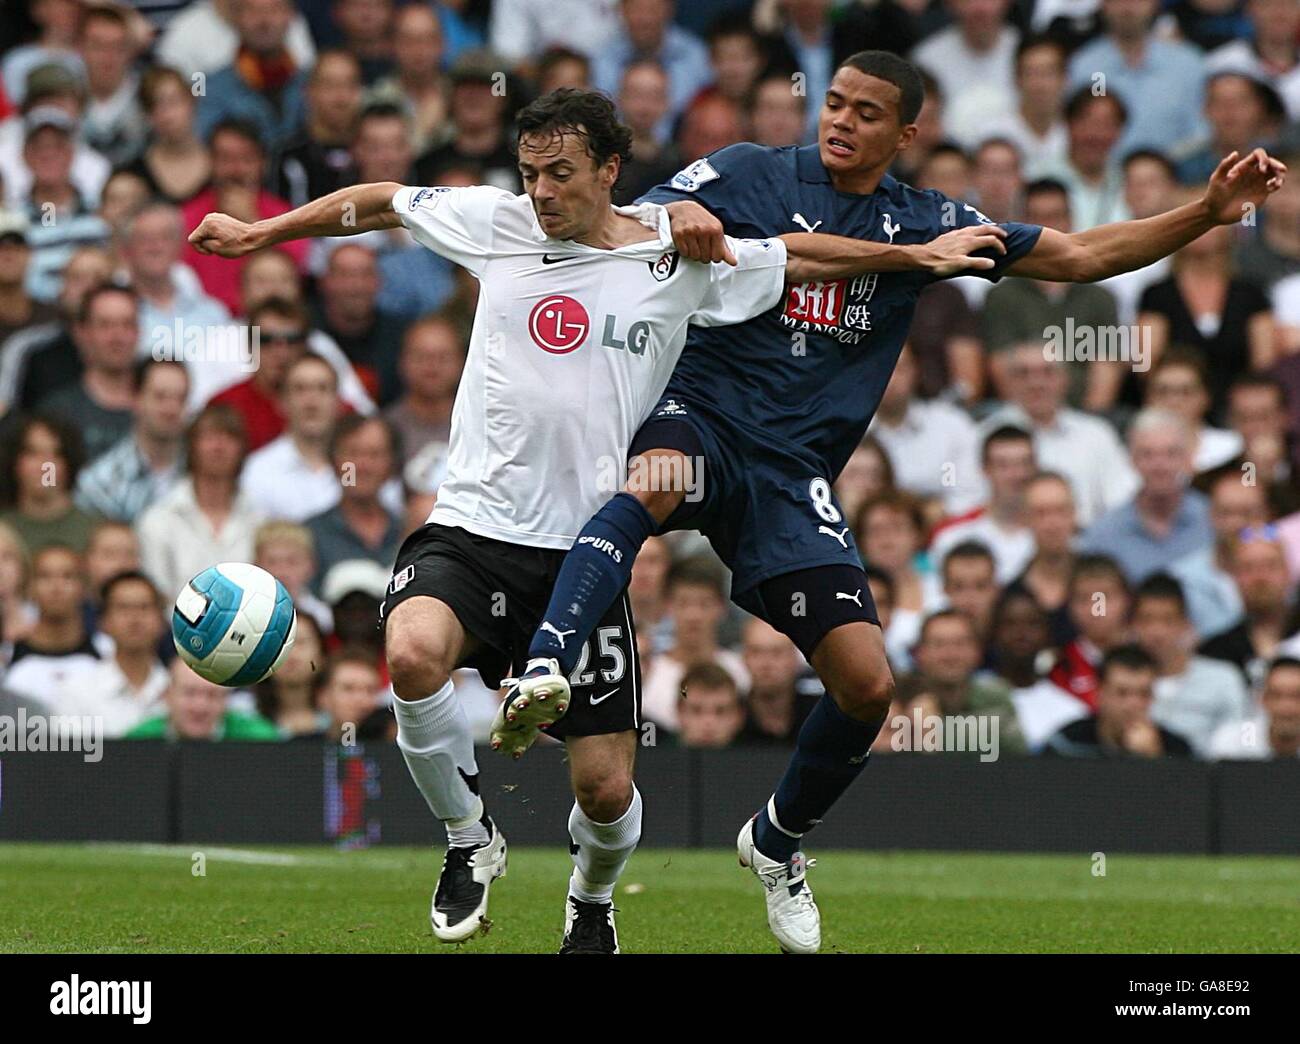 Simon Davies, Fulham und Jermaine Jenas, Tottenham Hotspur, kämpfen um den Ball Stockfoto